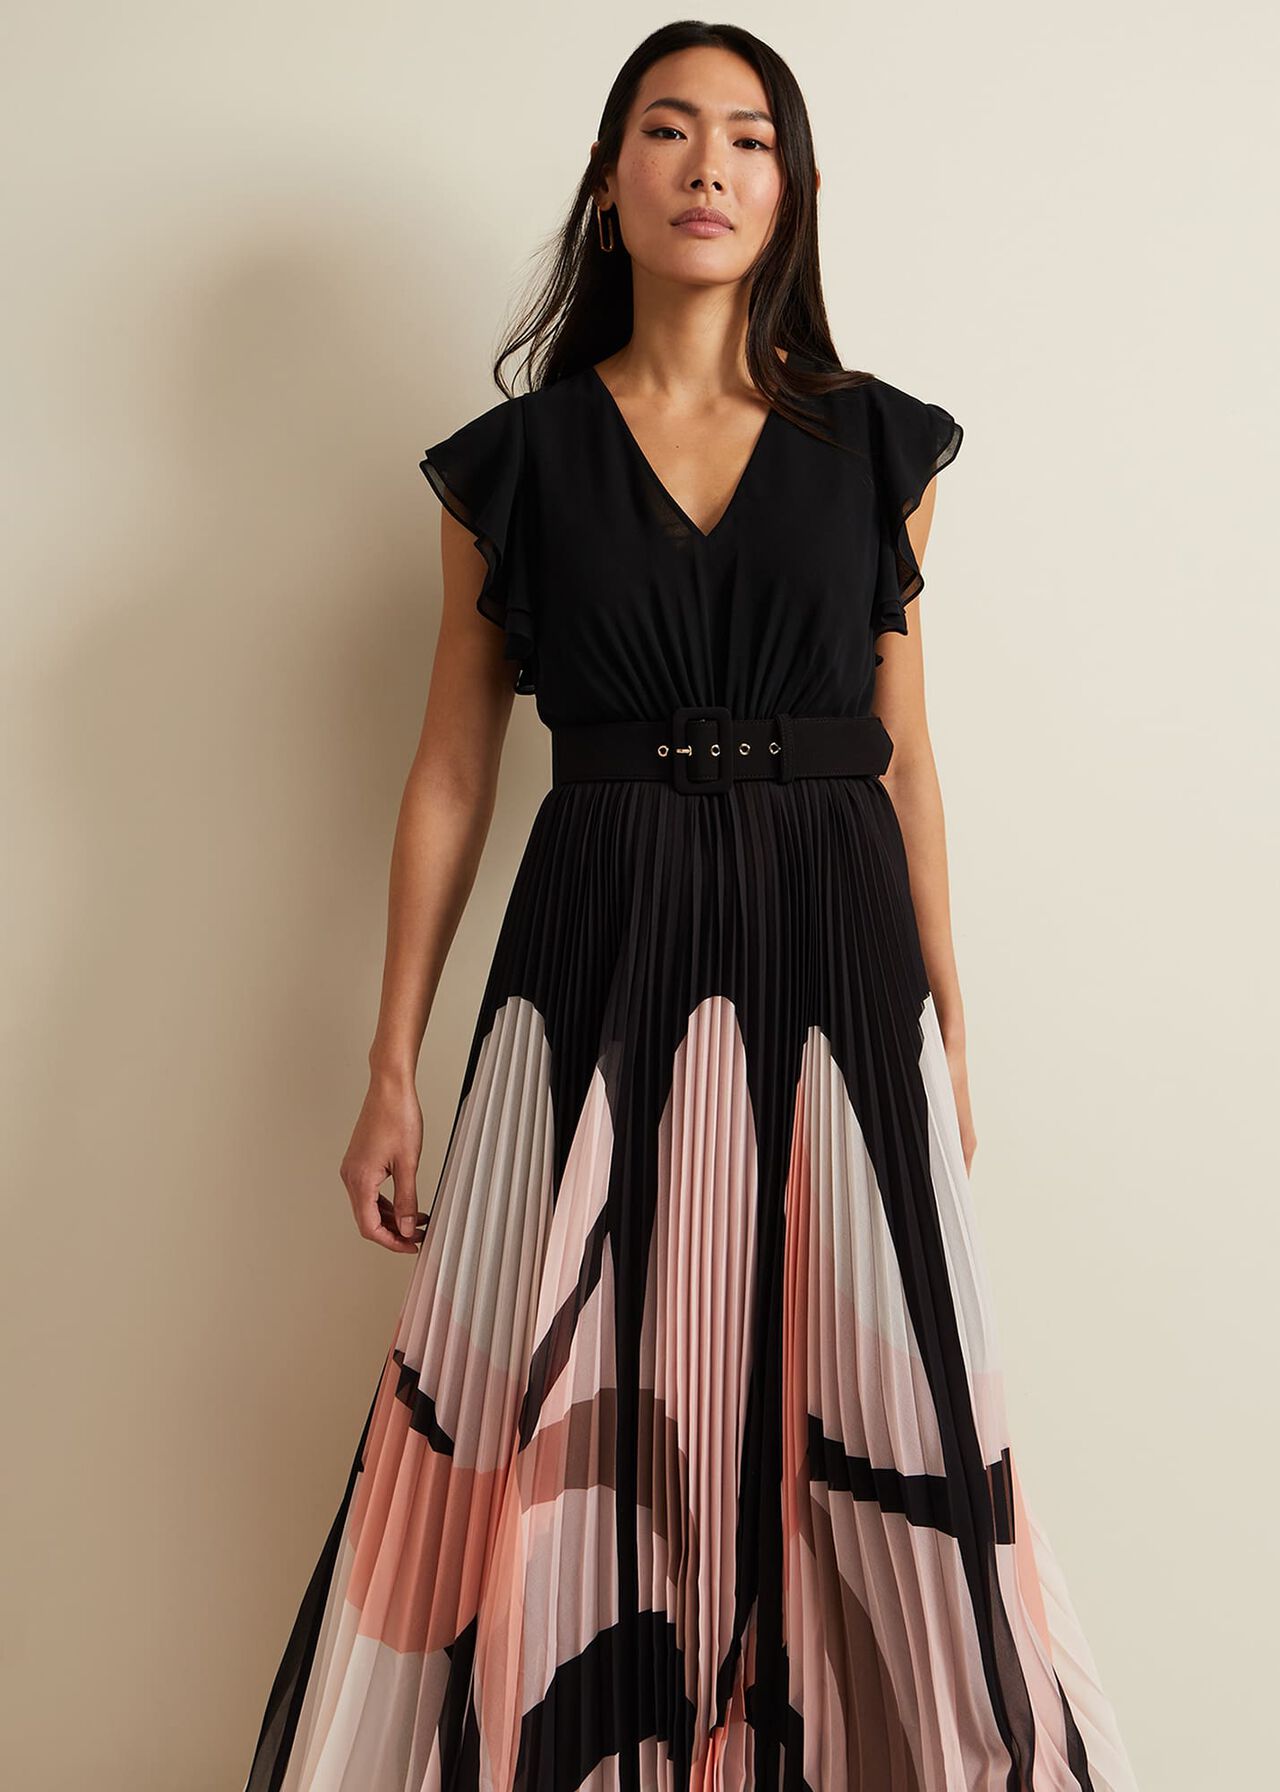 Isla Printed Skirt Ruffle Top Maxi Dress